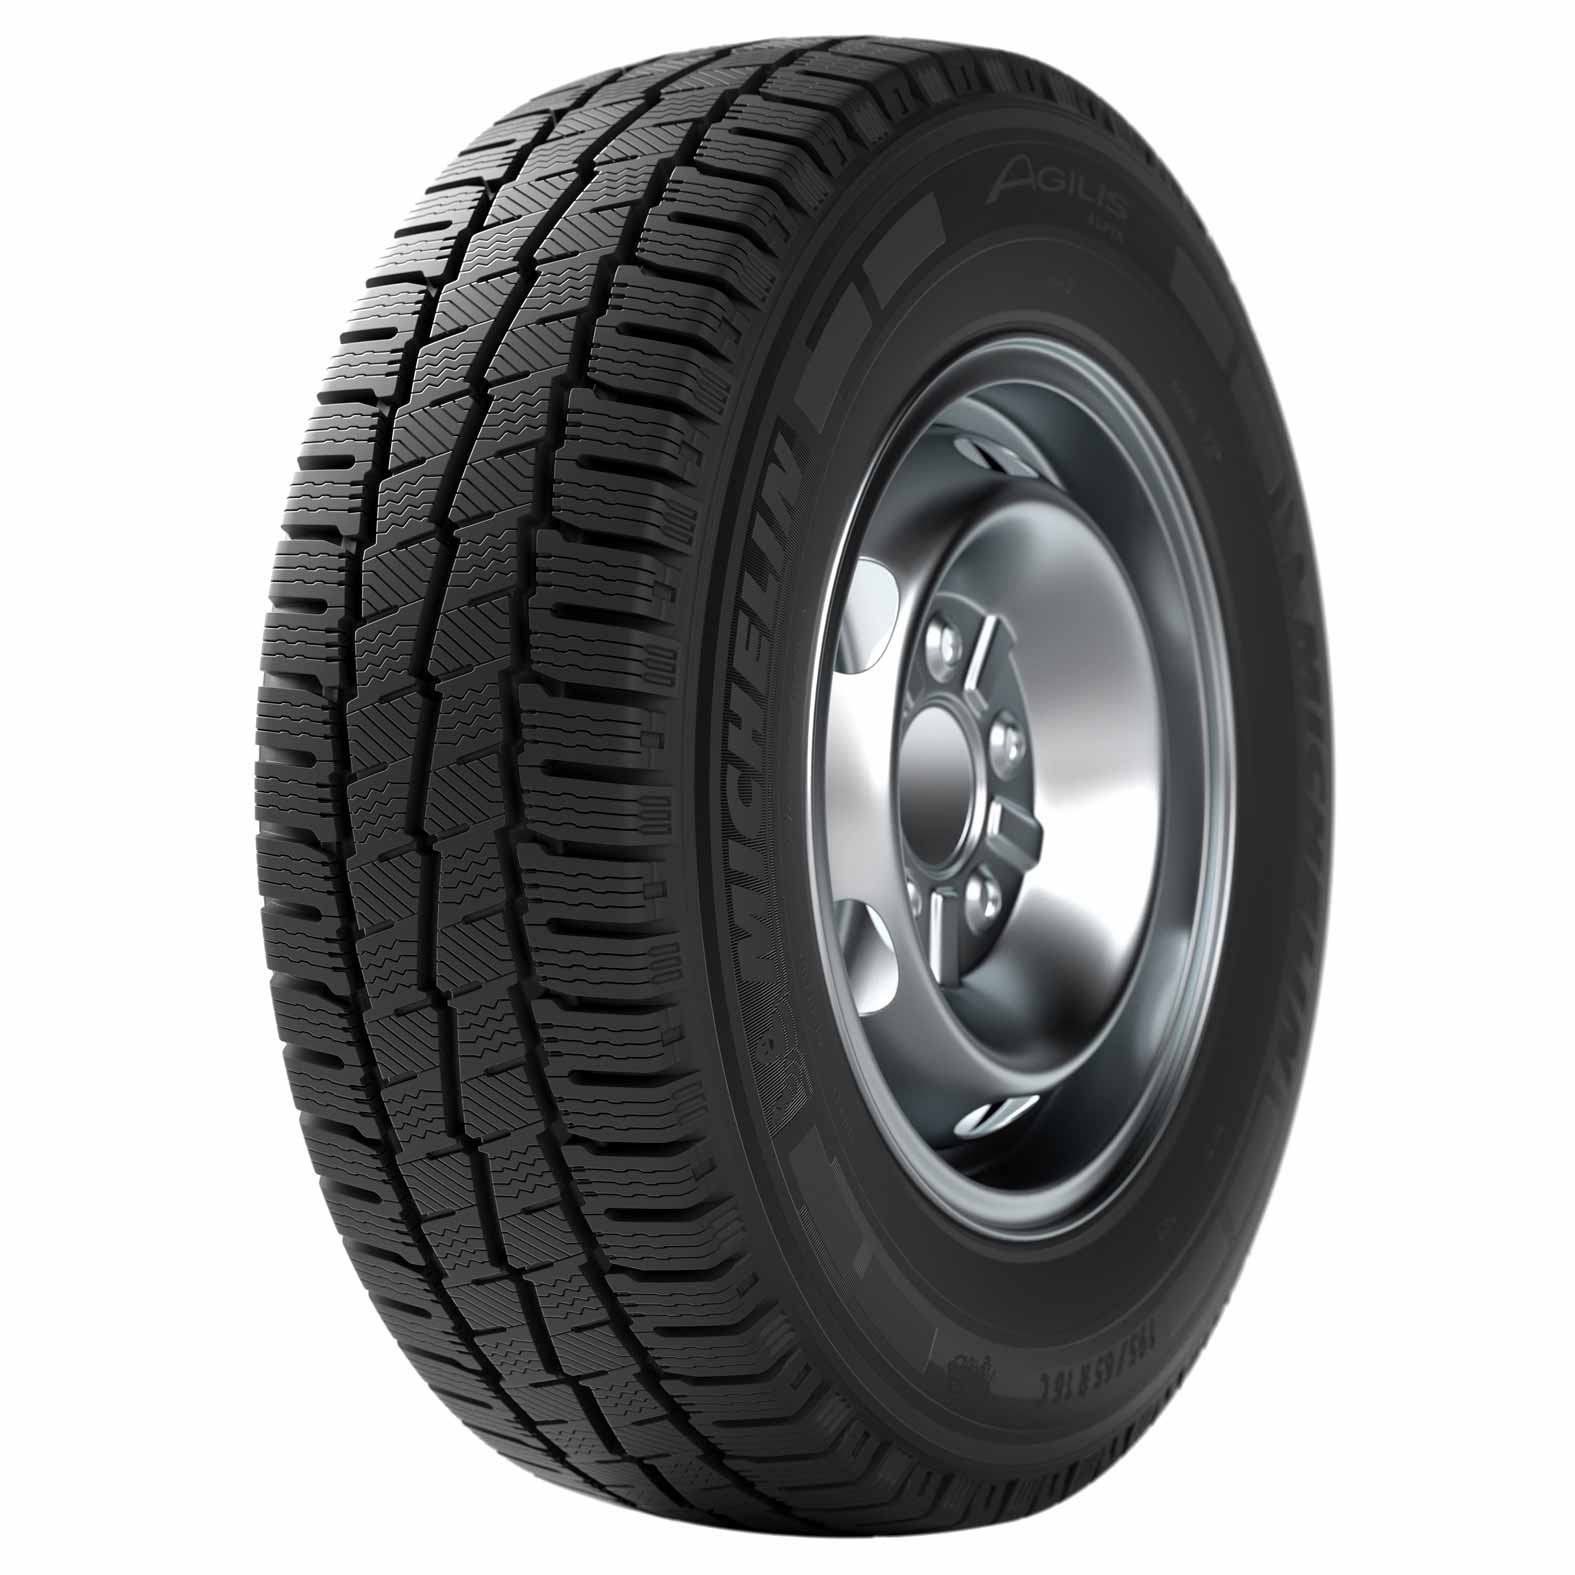 Michelin Agilis Alpin Tires for Winter | Kal Tire